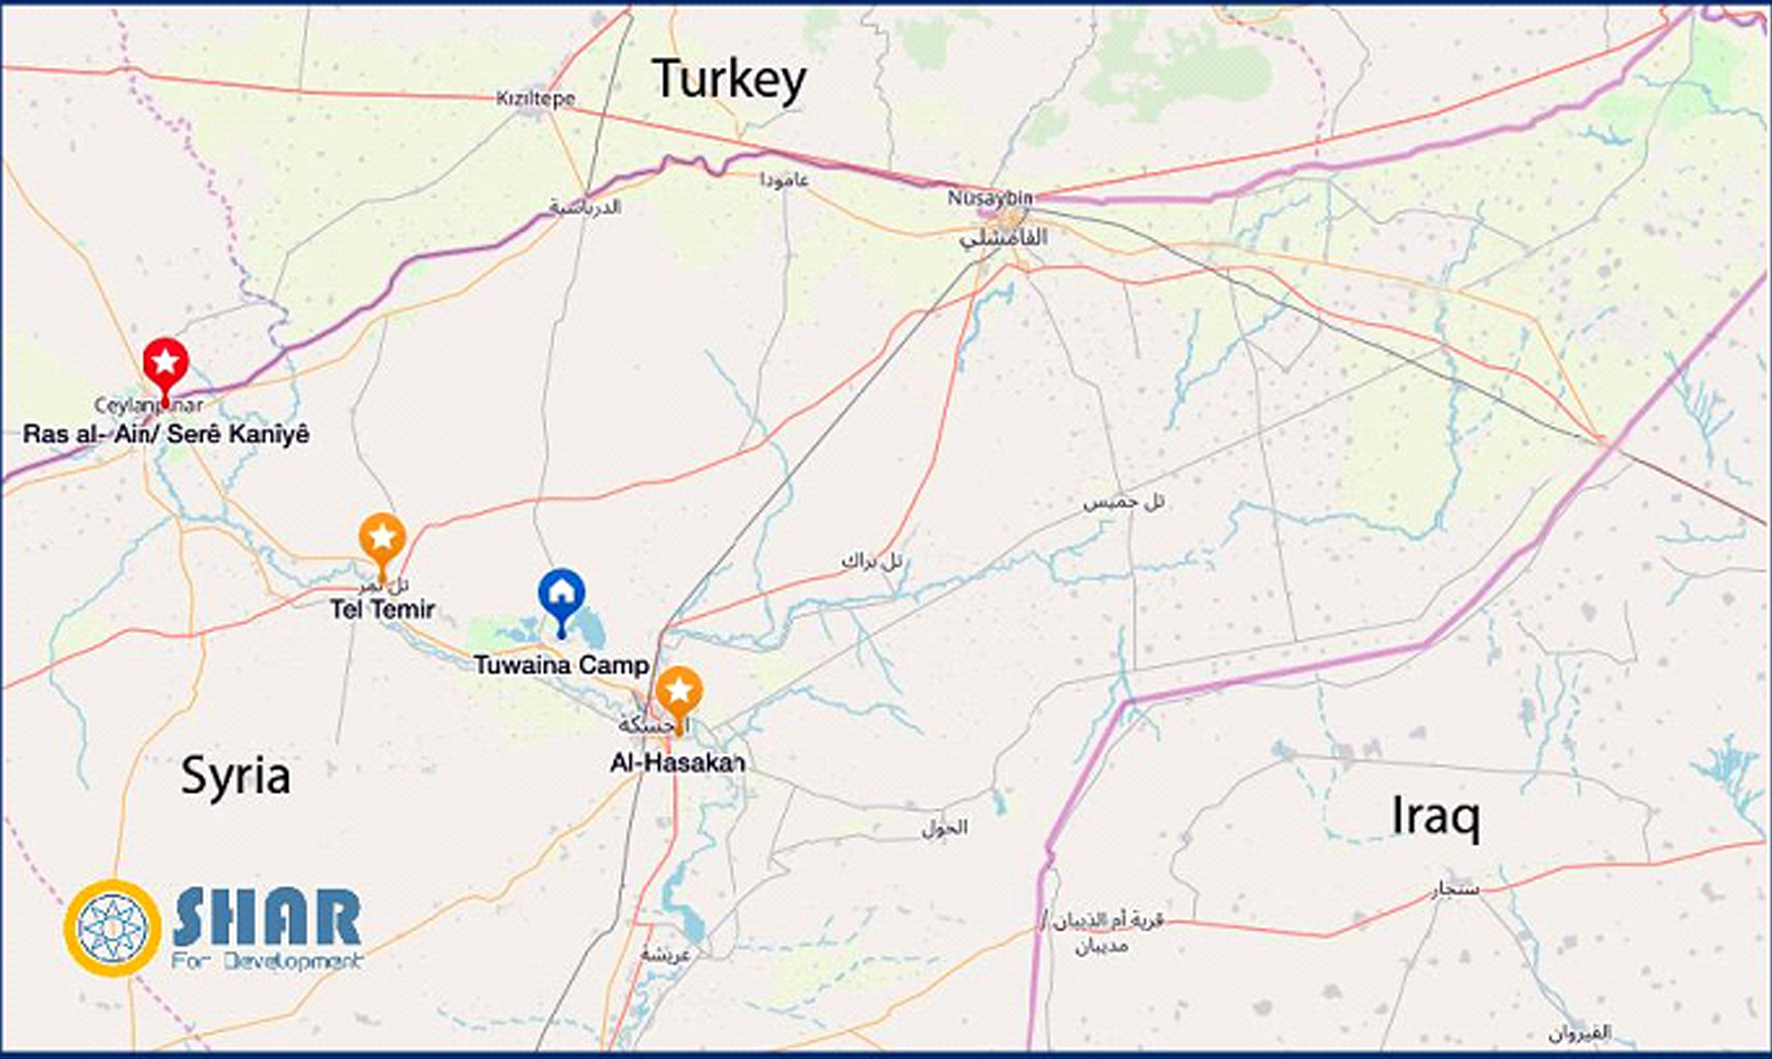 NES-Syria ,Al-Hasakah ,Al-Twaina camp location Camp coordinates: 36.576925, 40.625862